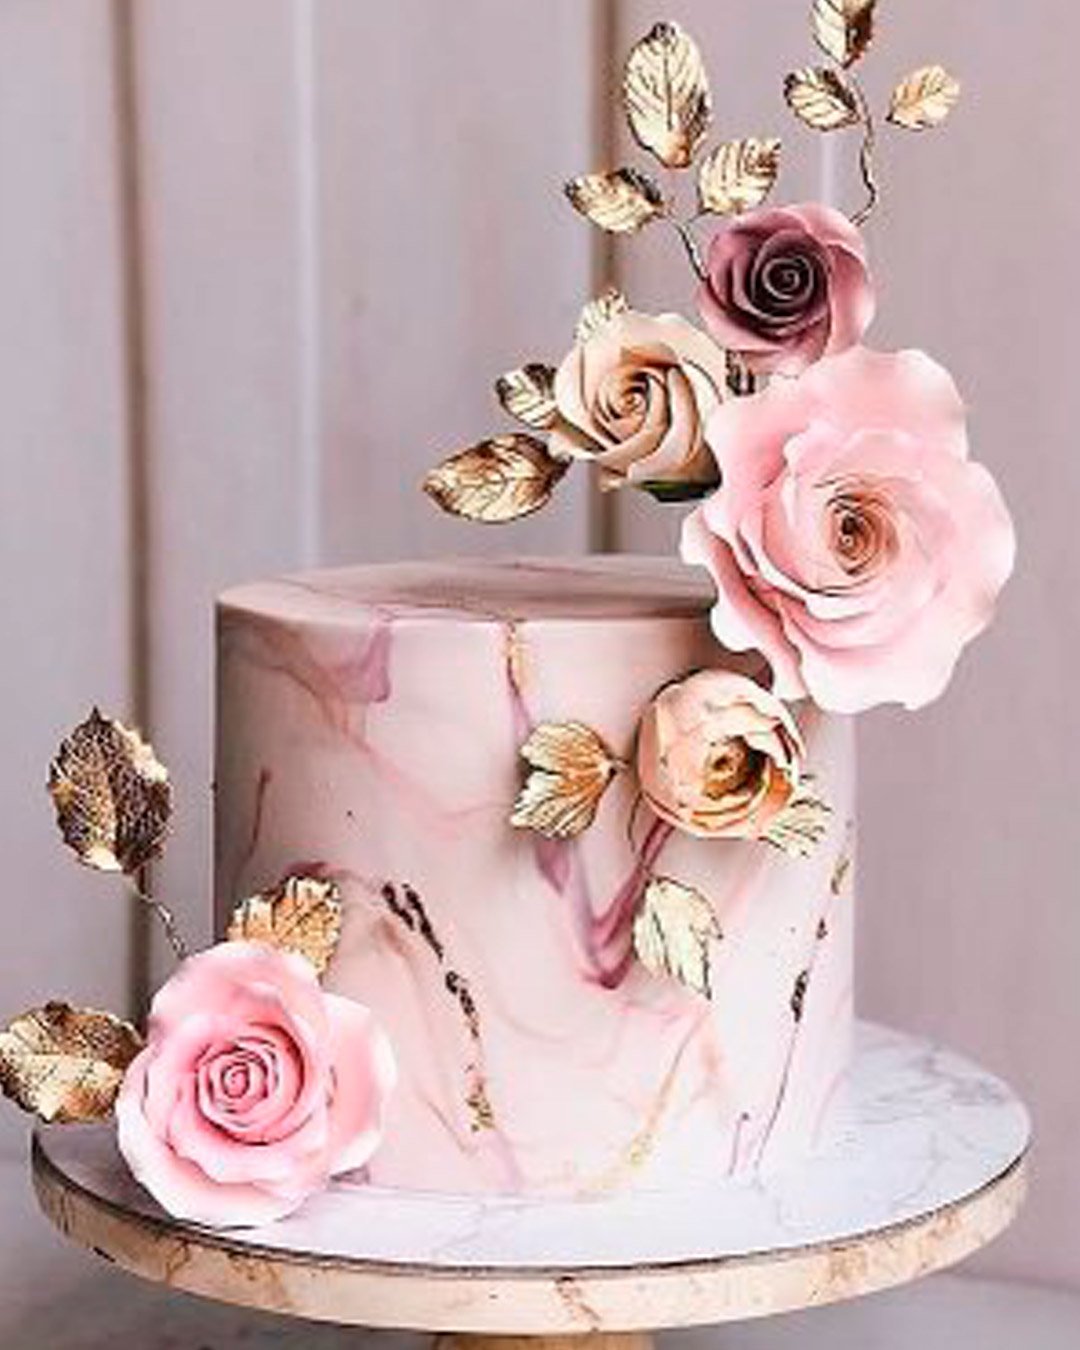 simple-romantic-wedding-cakes-pink-wedding-cake-with-flowers-duchess